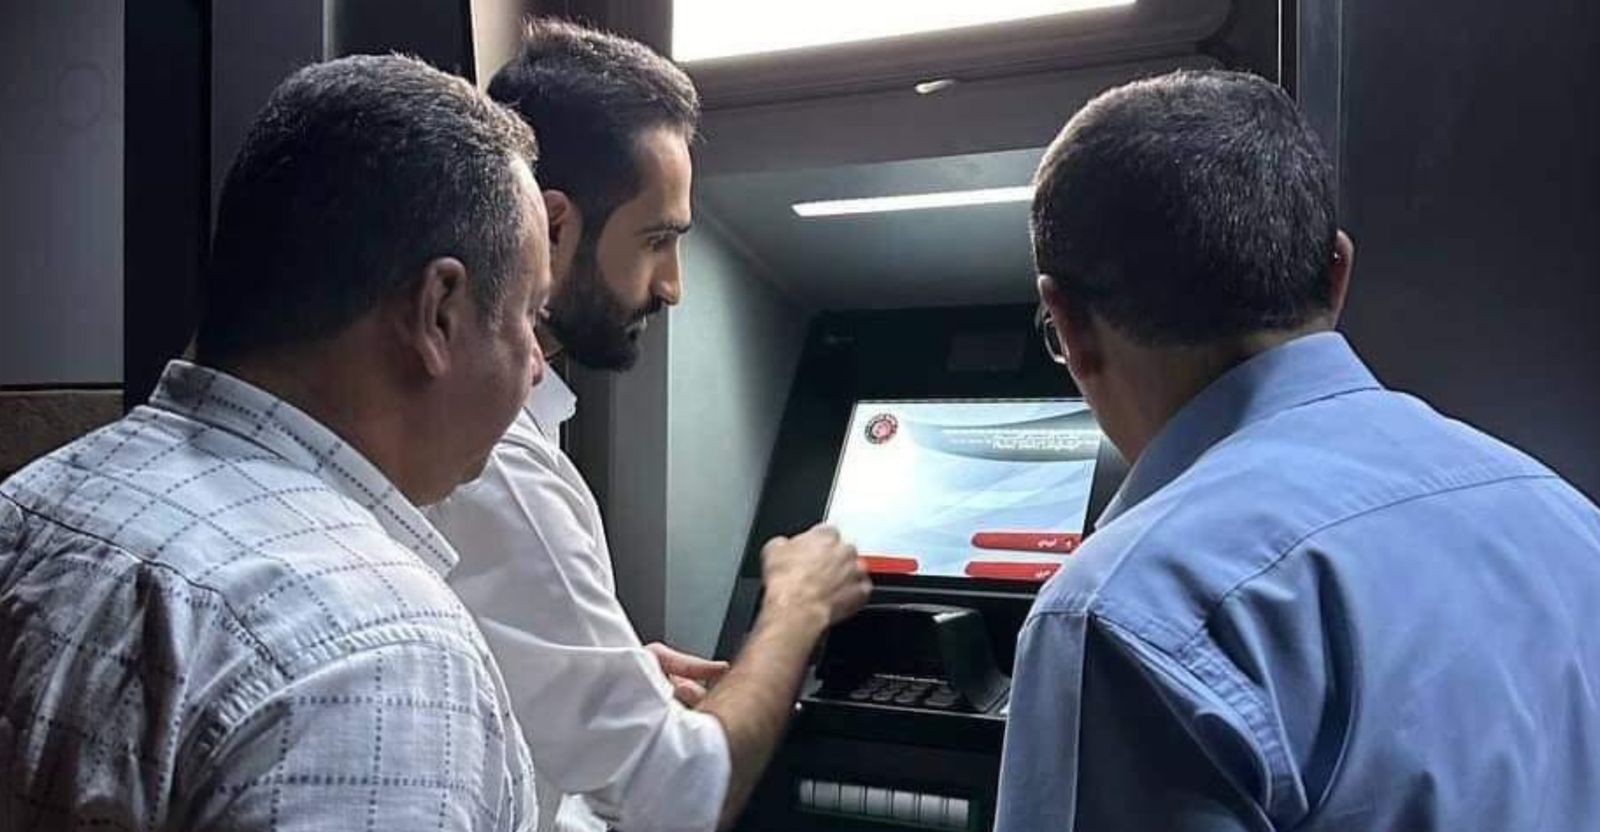 +25,000 Kurdistan employees receive salaries via "My Account"